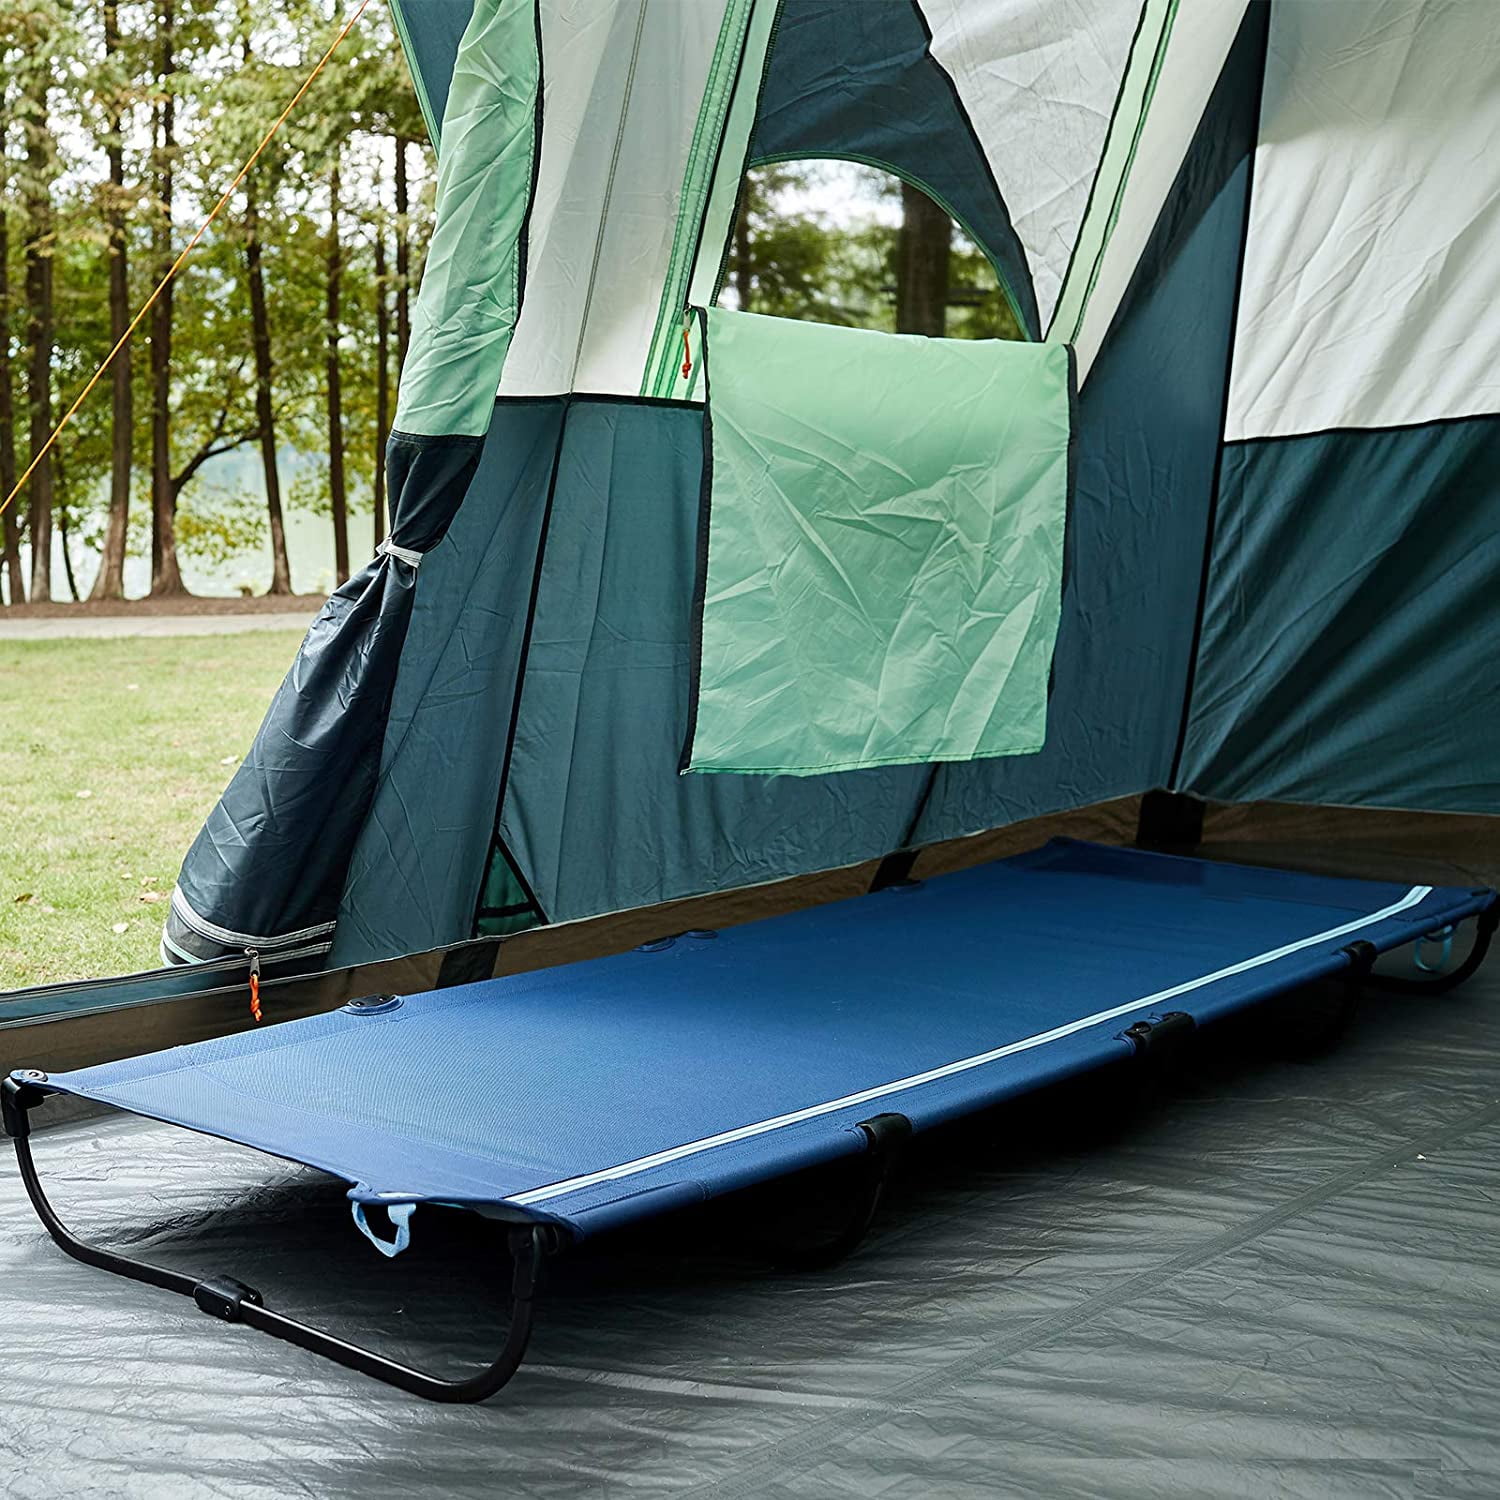 Deluxe Folding Adjustable Sun Lounger / Camping Cot - Green - Walmart.com